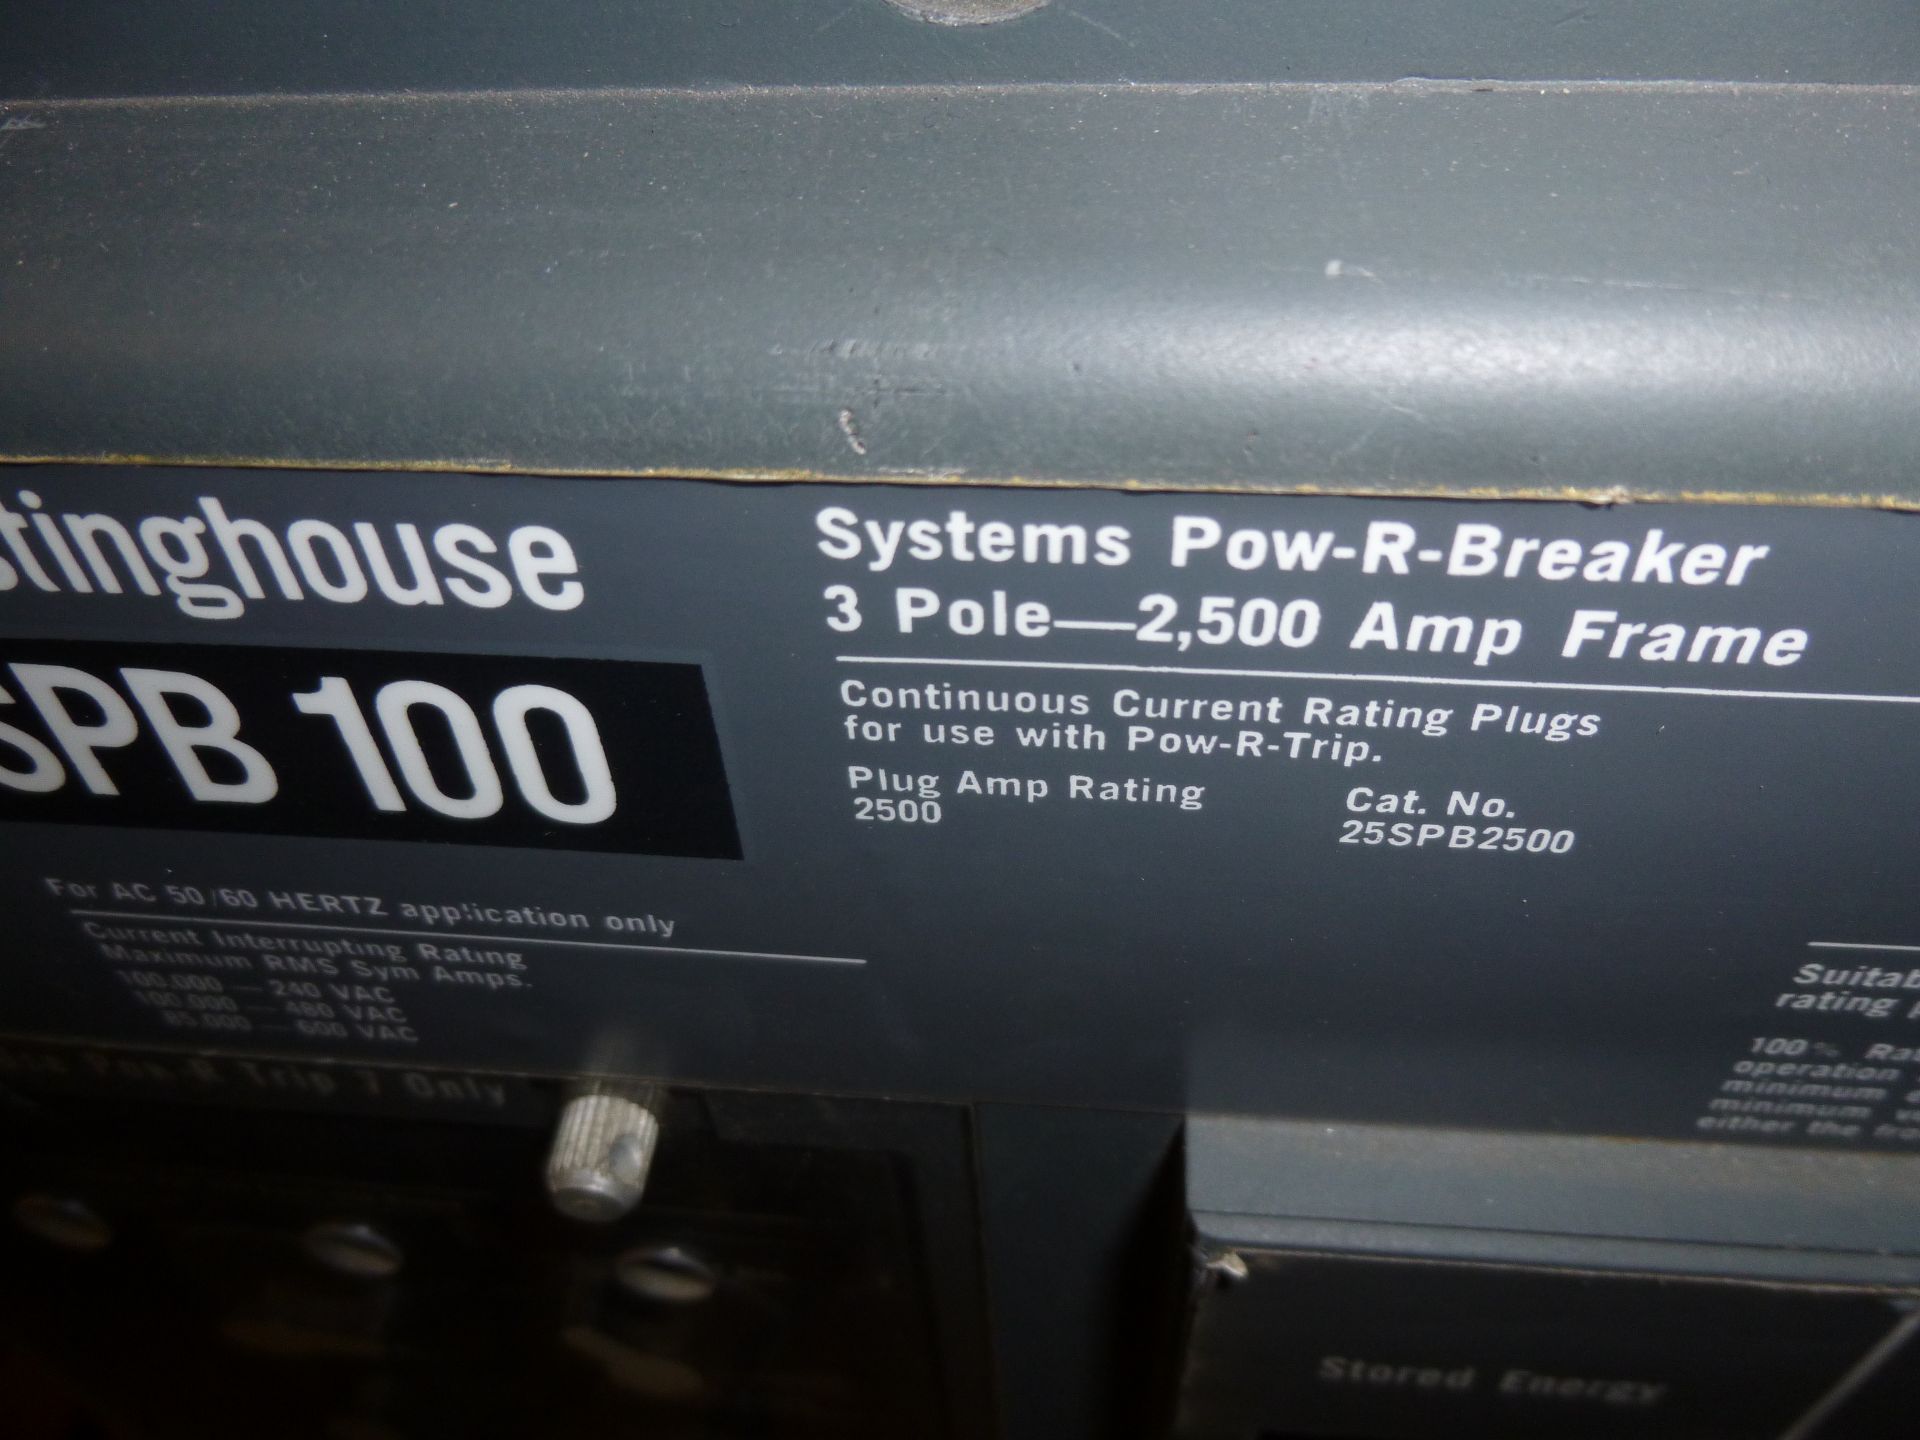 Westinghouse SPB100 systems Pow-R-Breaker, 3-pole, 2500amp frame - Image 3 of 3